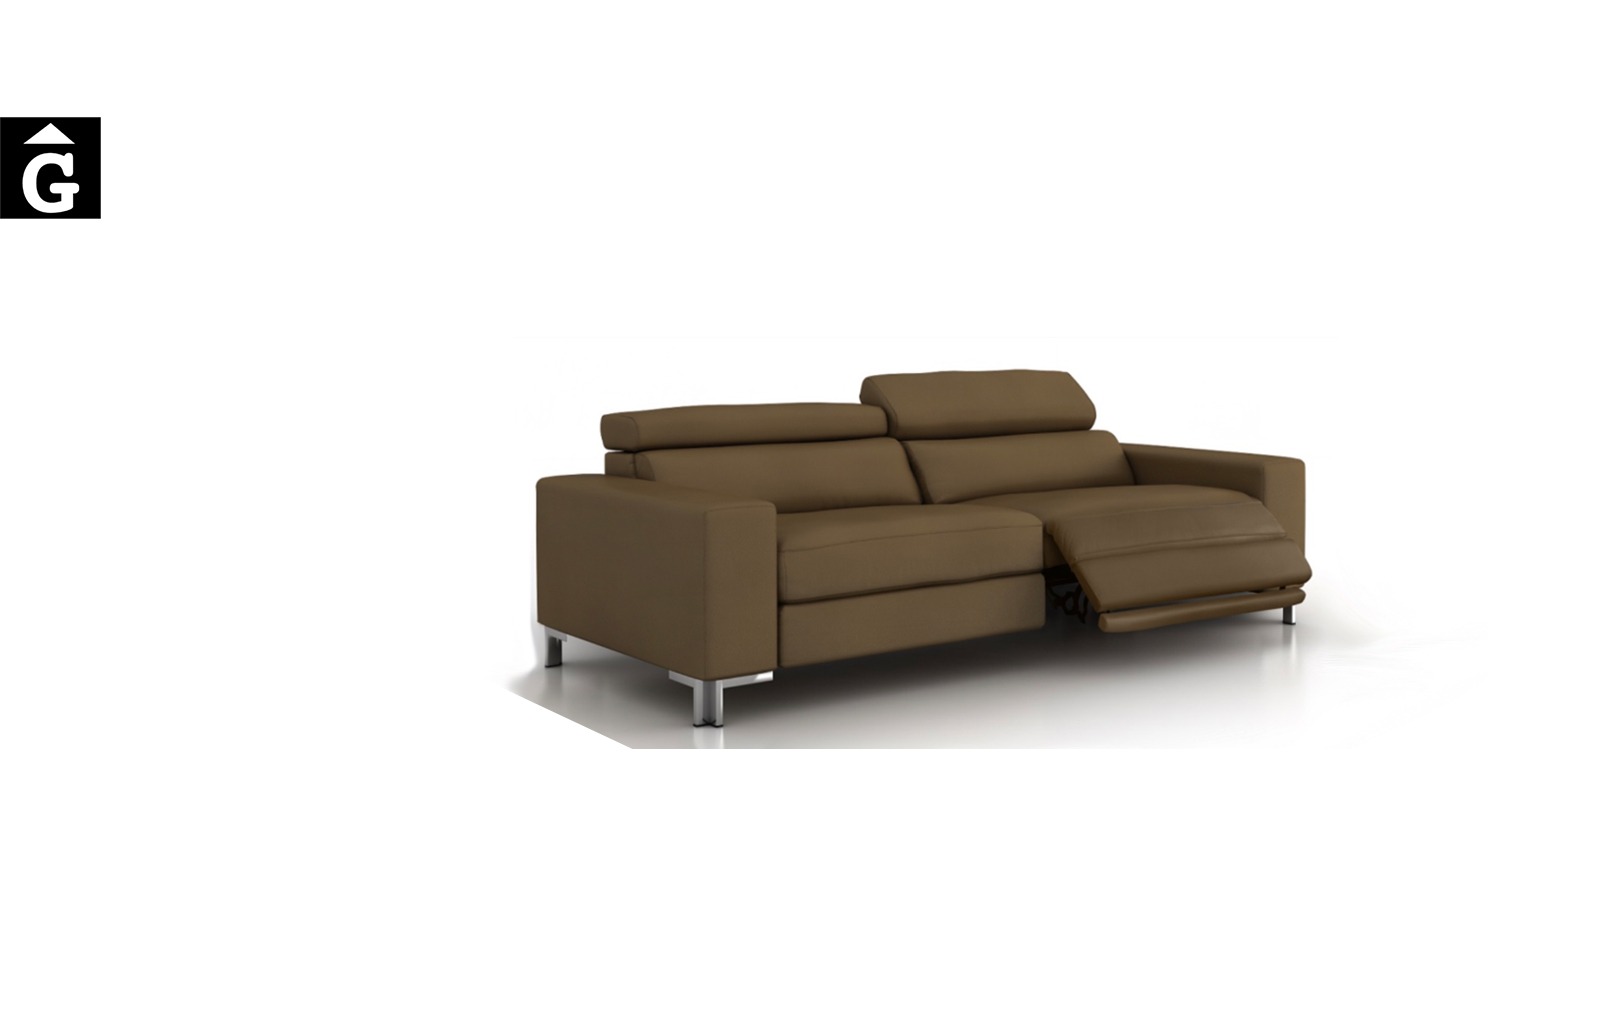 Suma sofà relax pota alta Tapiza Moradillo per mobles Gifreu tapisseria de qualitat sofas relax llits puff pouf chaixelongues butaques sillons